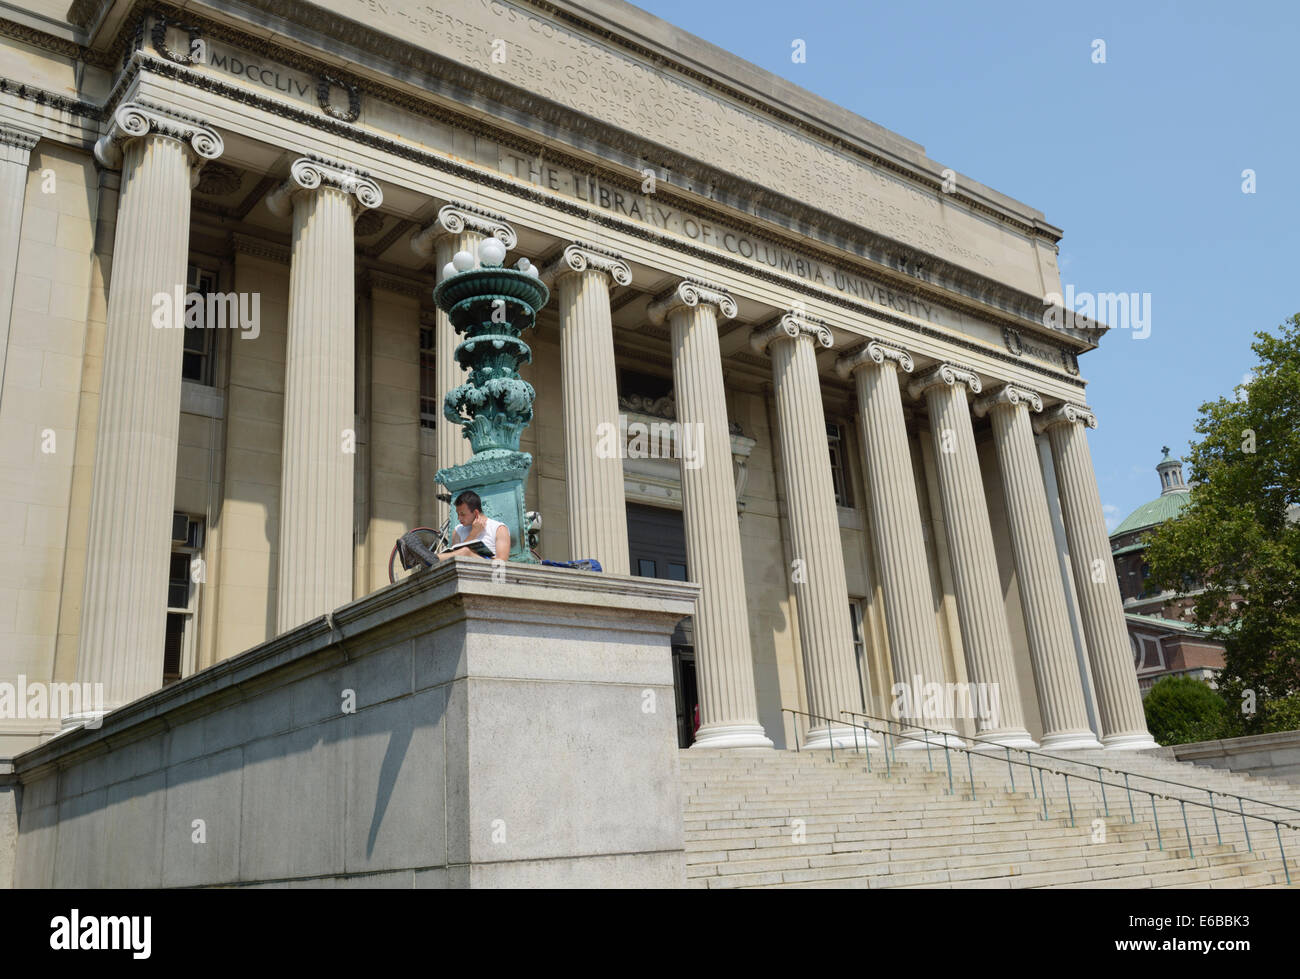 Biblioteca Conmemorativa baja, Columbia University. Foto de stock